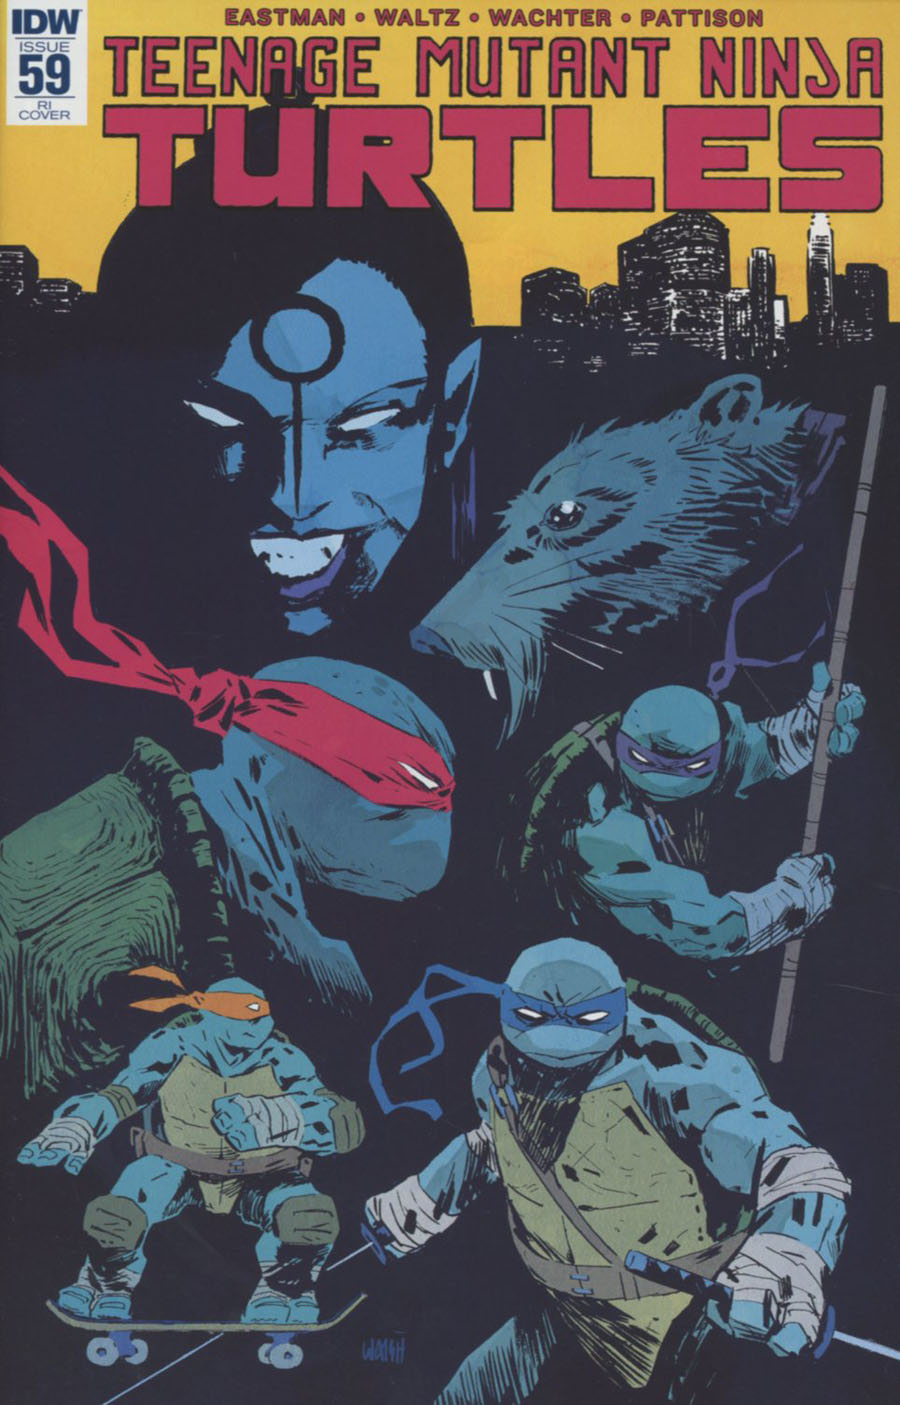 Teenage Mutant Ninja Turtles Vol 5 #59 Cover C Incentive Michael Walsh Variant Cover